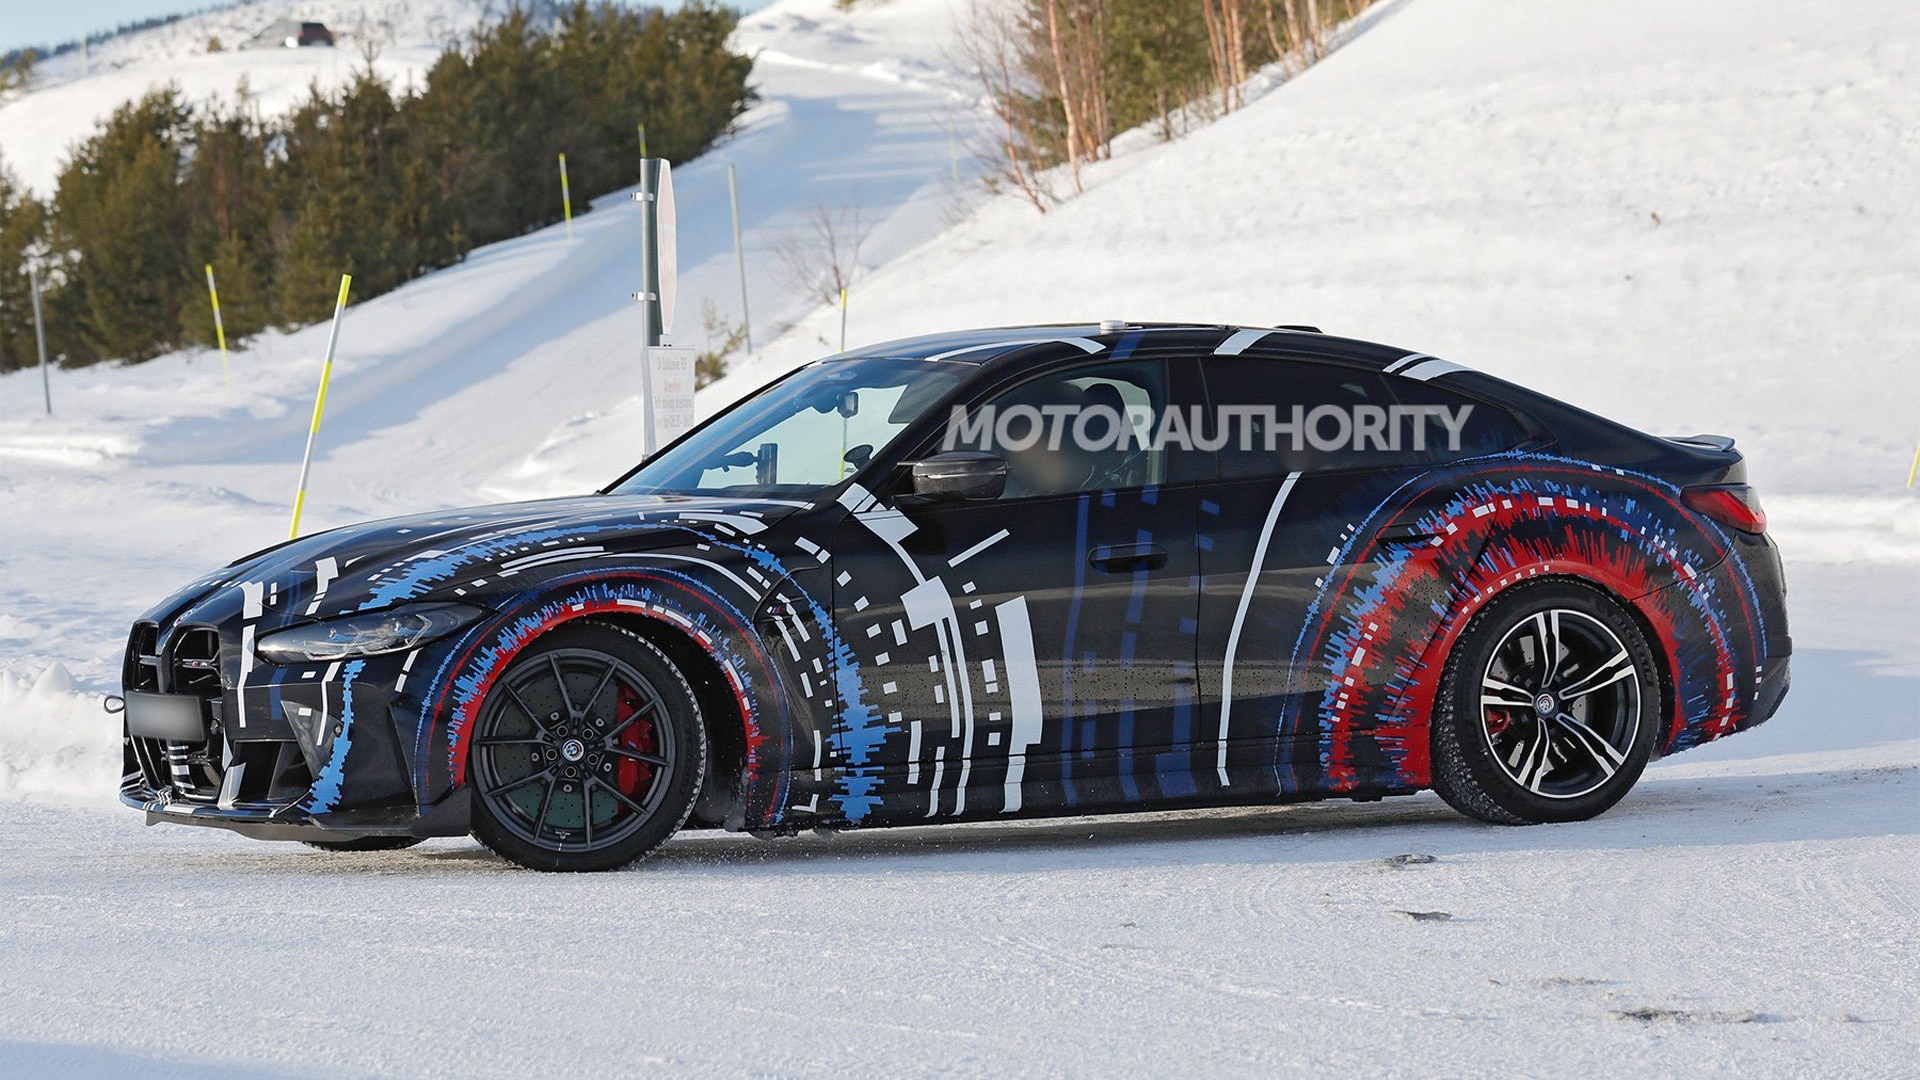 BMW M quad-motor powertrain test mule spy shots - Photo credit: Baldauf